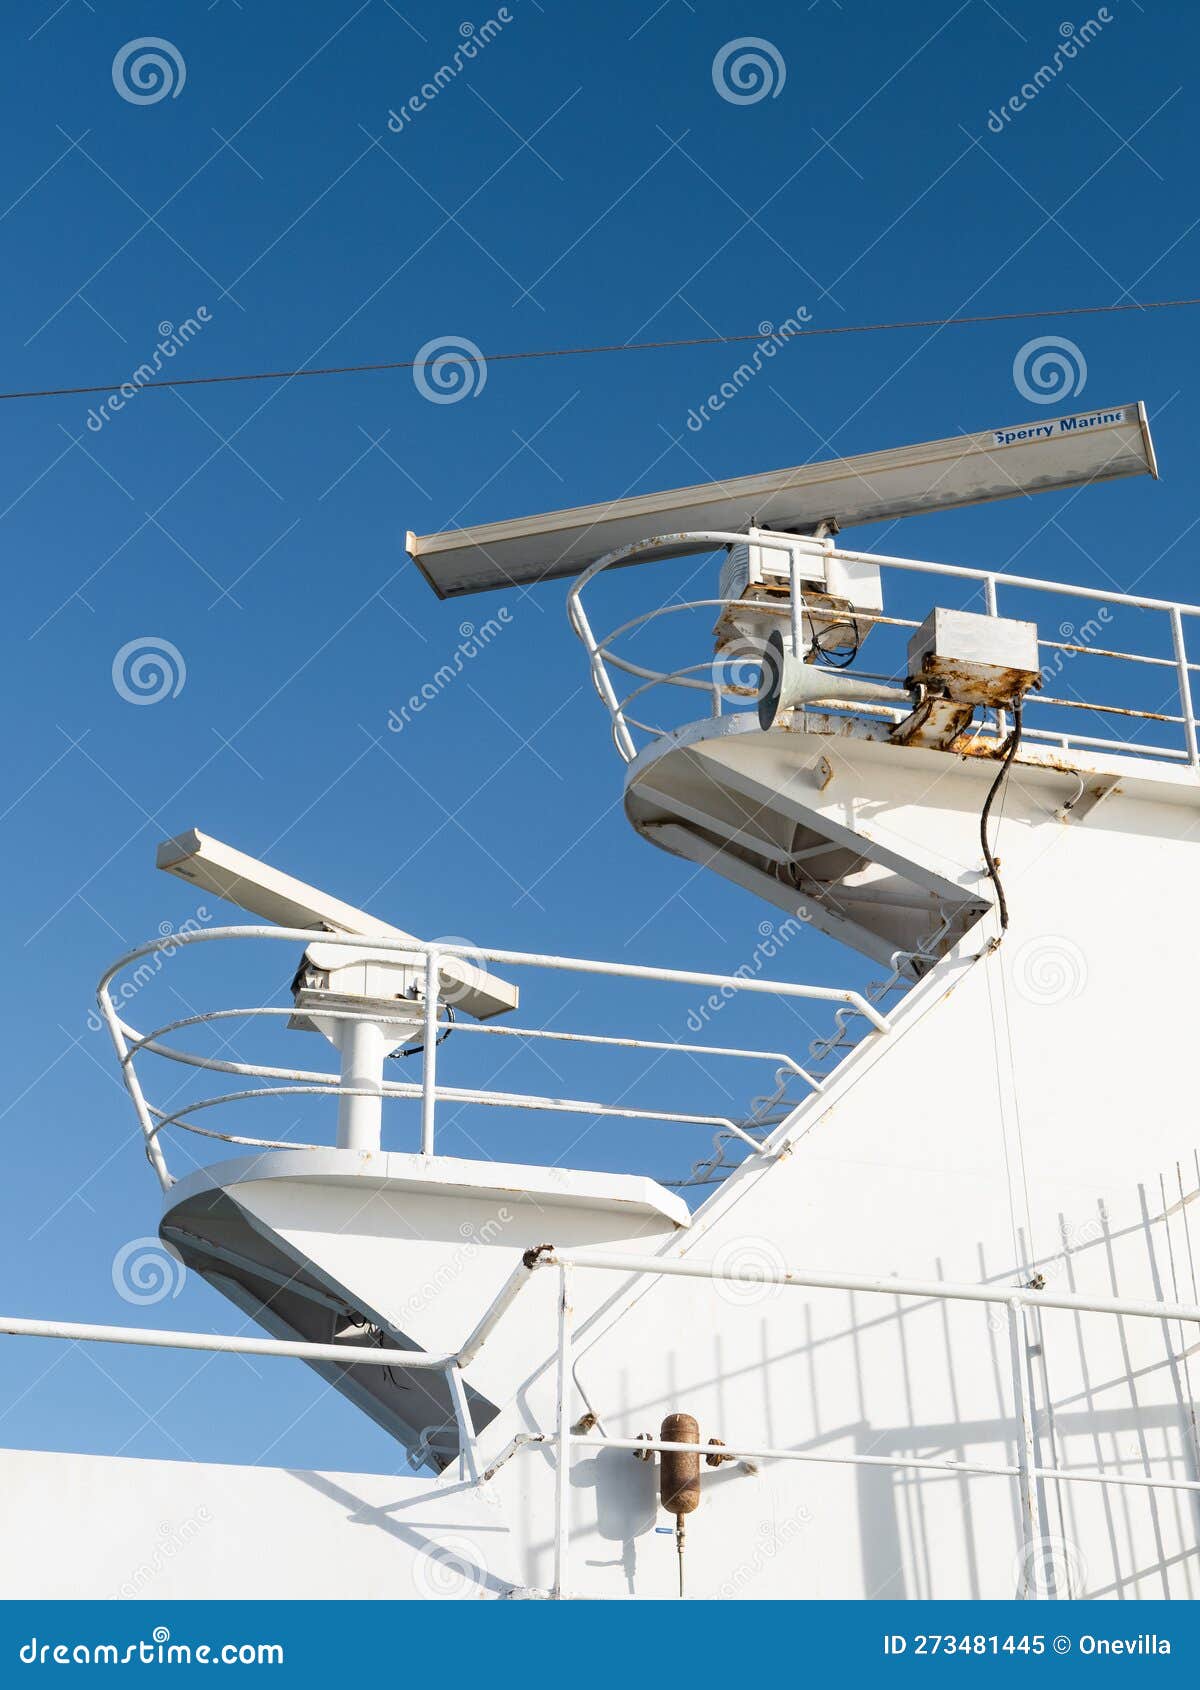 Sperry Marine Radar Antenna on Armas Ferry Editorial Image - Image